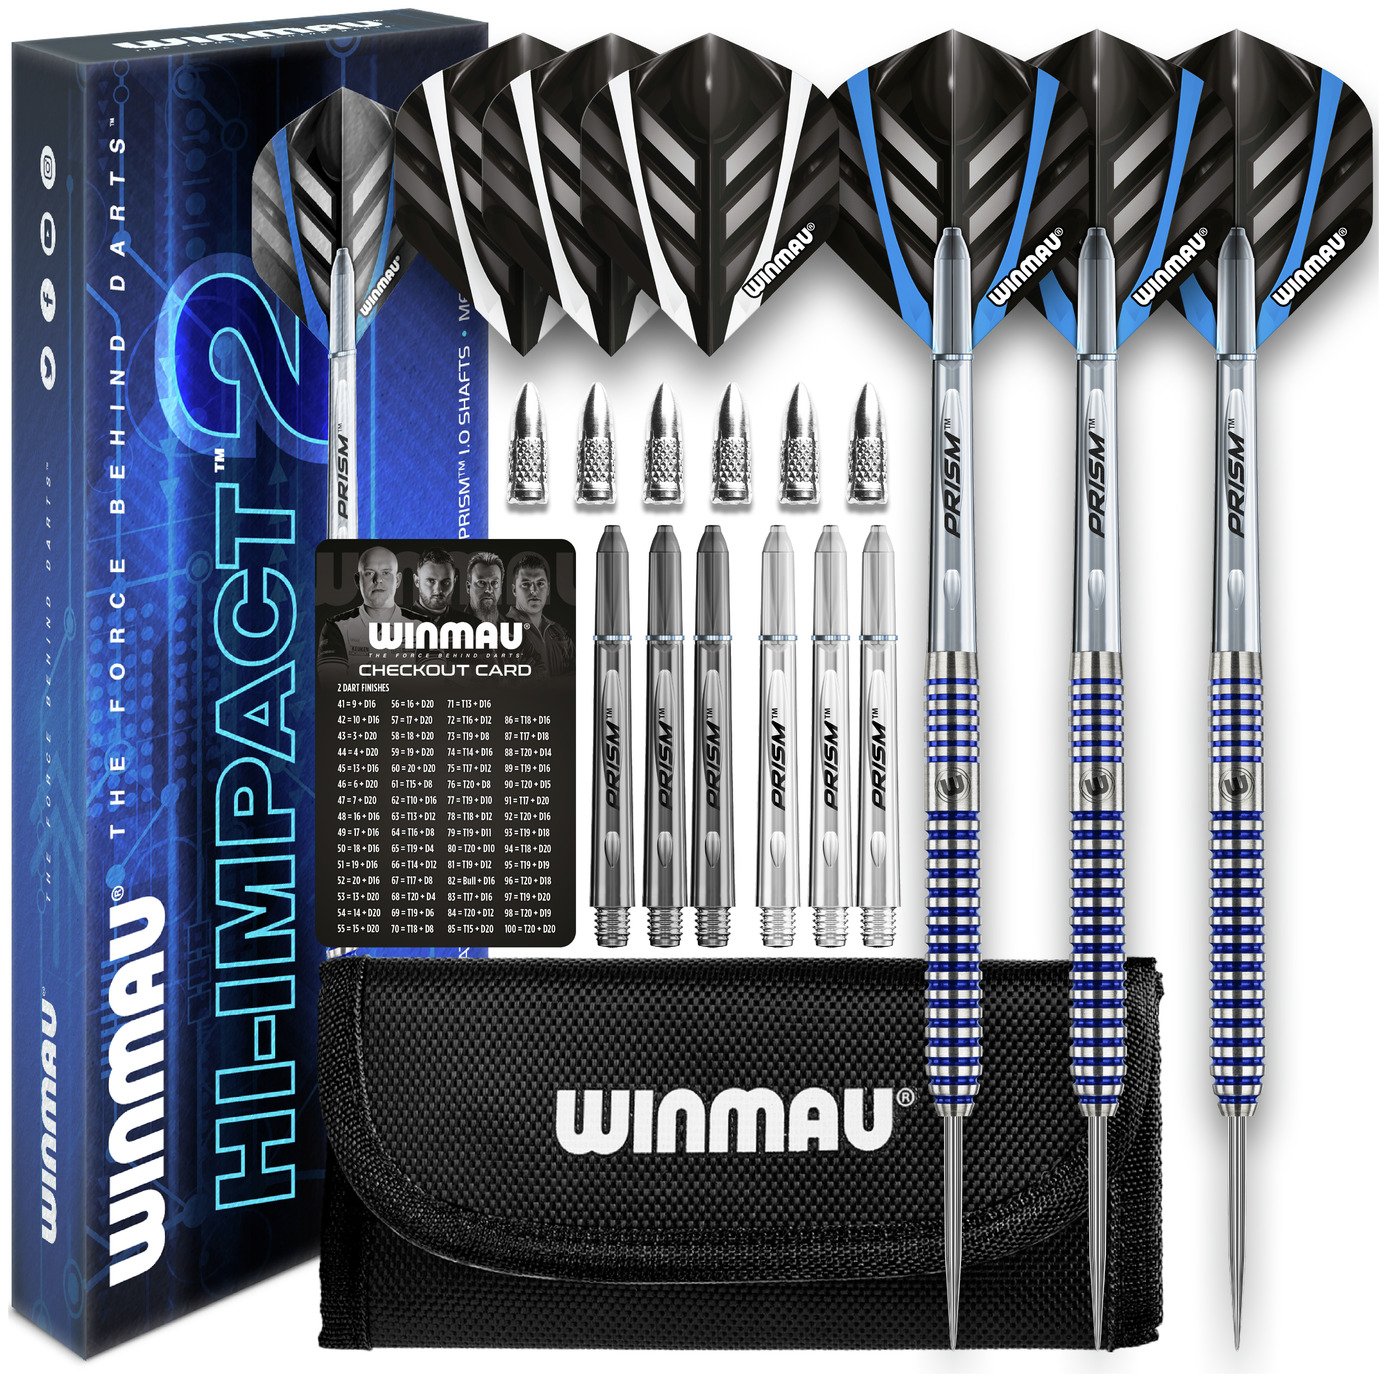 Winmau Hi-Impact 2 24g 95% Tungsten Darts Set and Case